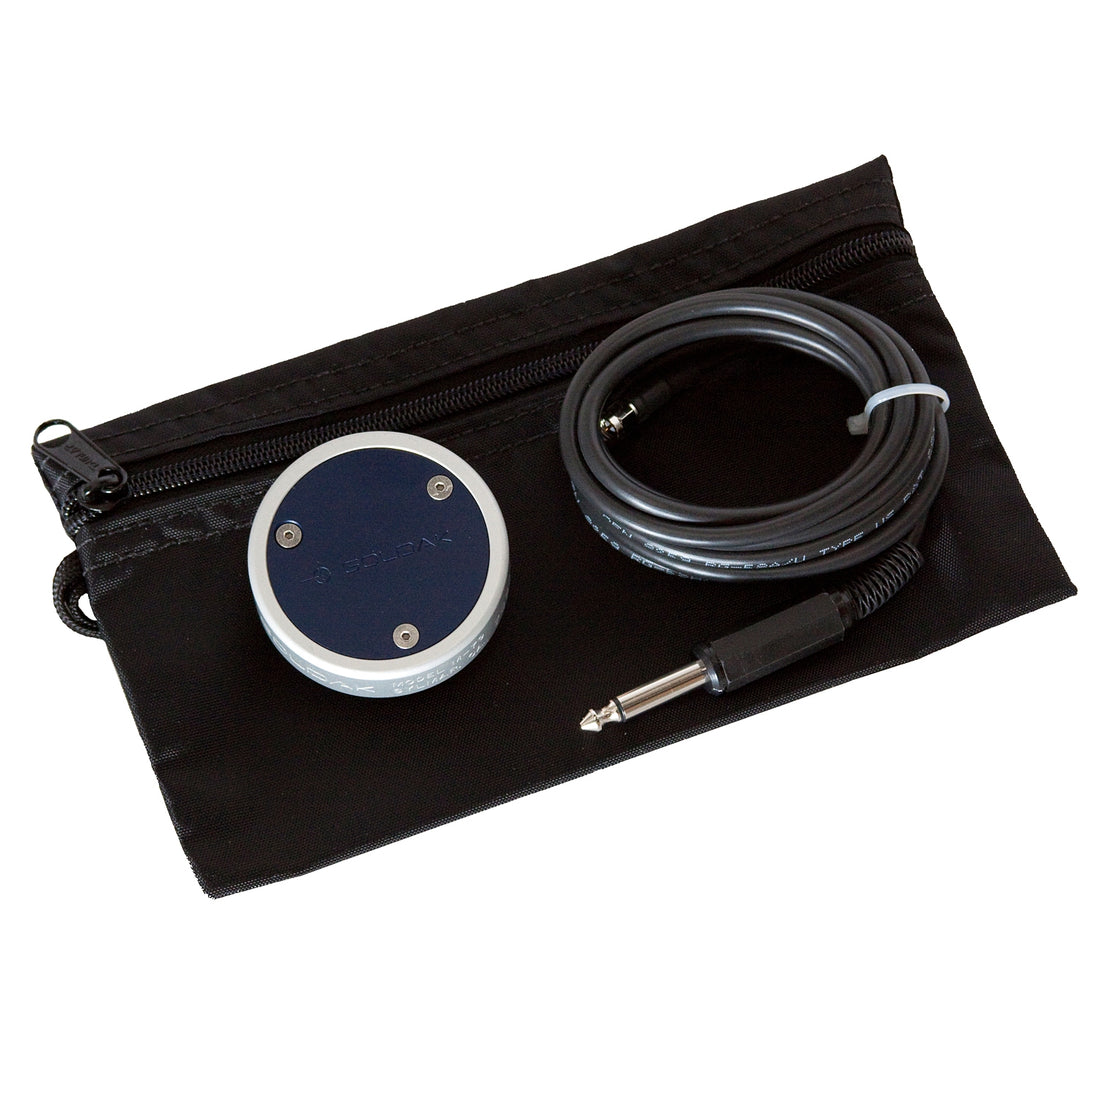 Goldak 777-A Leak Detector with M-79 Disc-Shaped Microphone + 12" Microphone Probe + Headphones + Small Hard Case